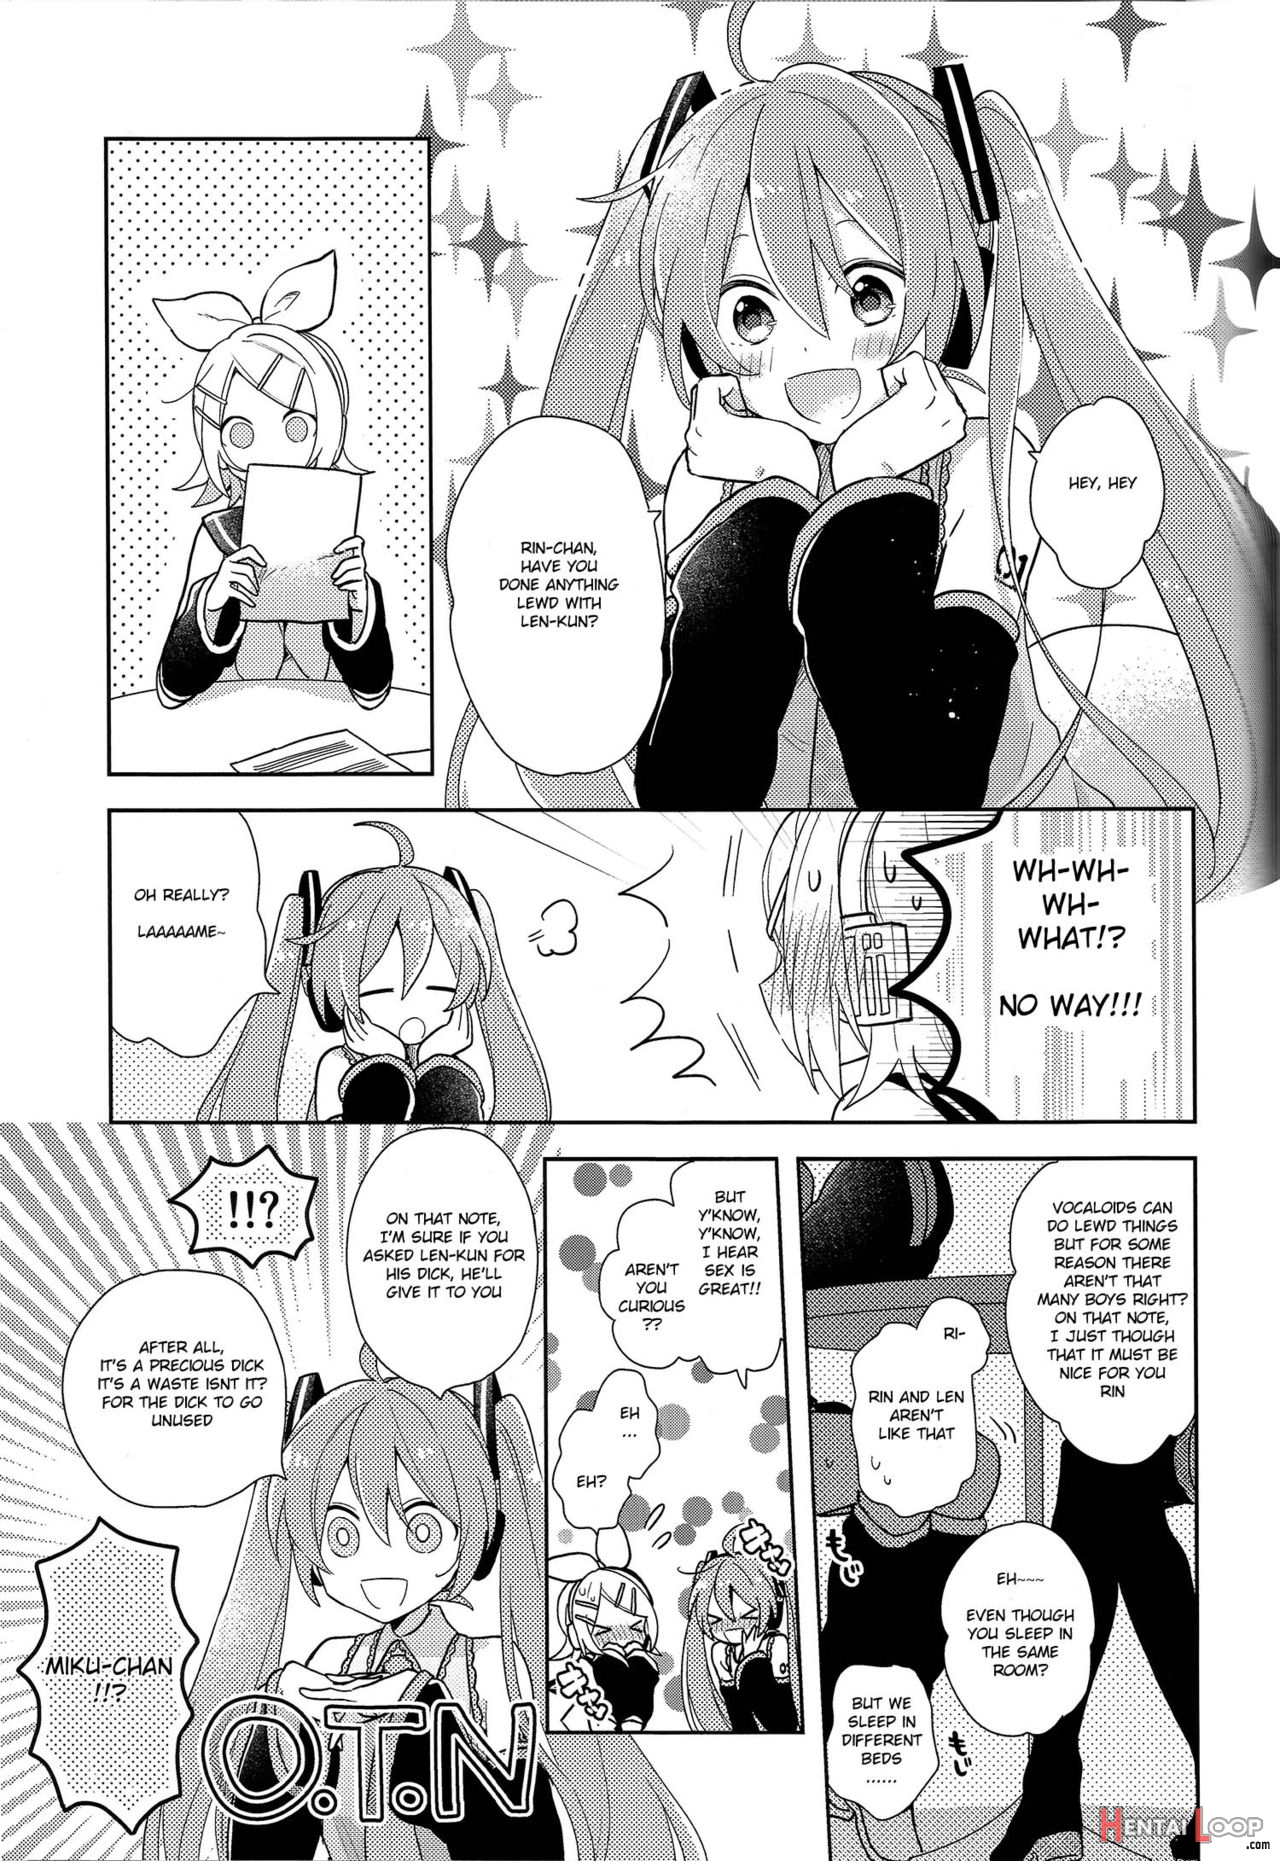 Dream Seeing Rabbit-san page 5